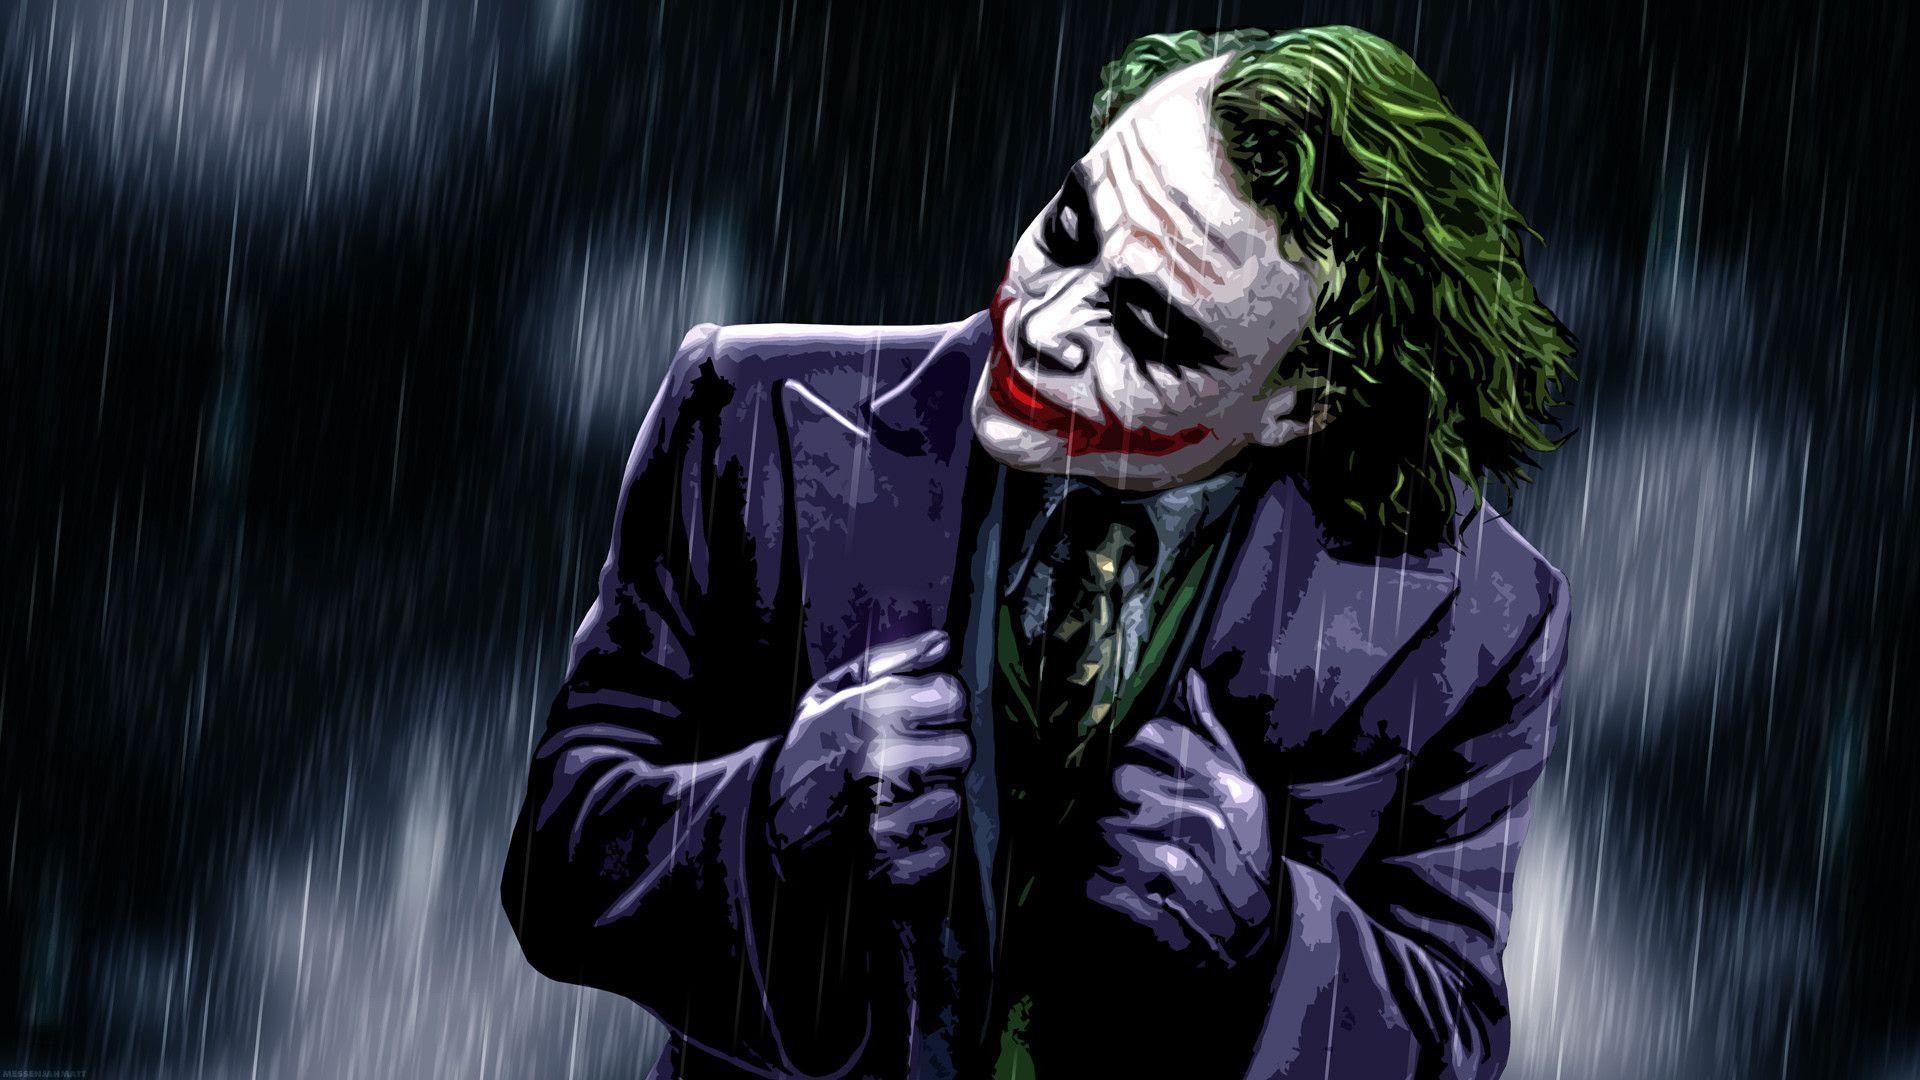 1920x1080 The Joker - The Dark Knight Wallpaper (23437897) - Fanpop